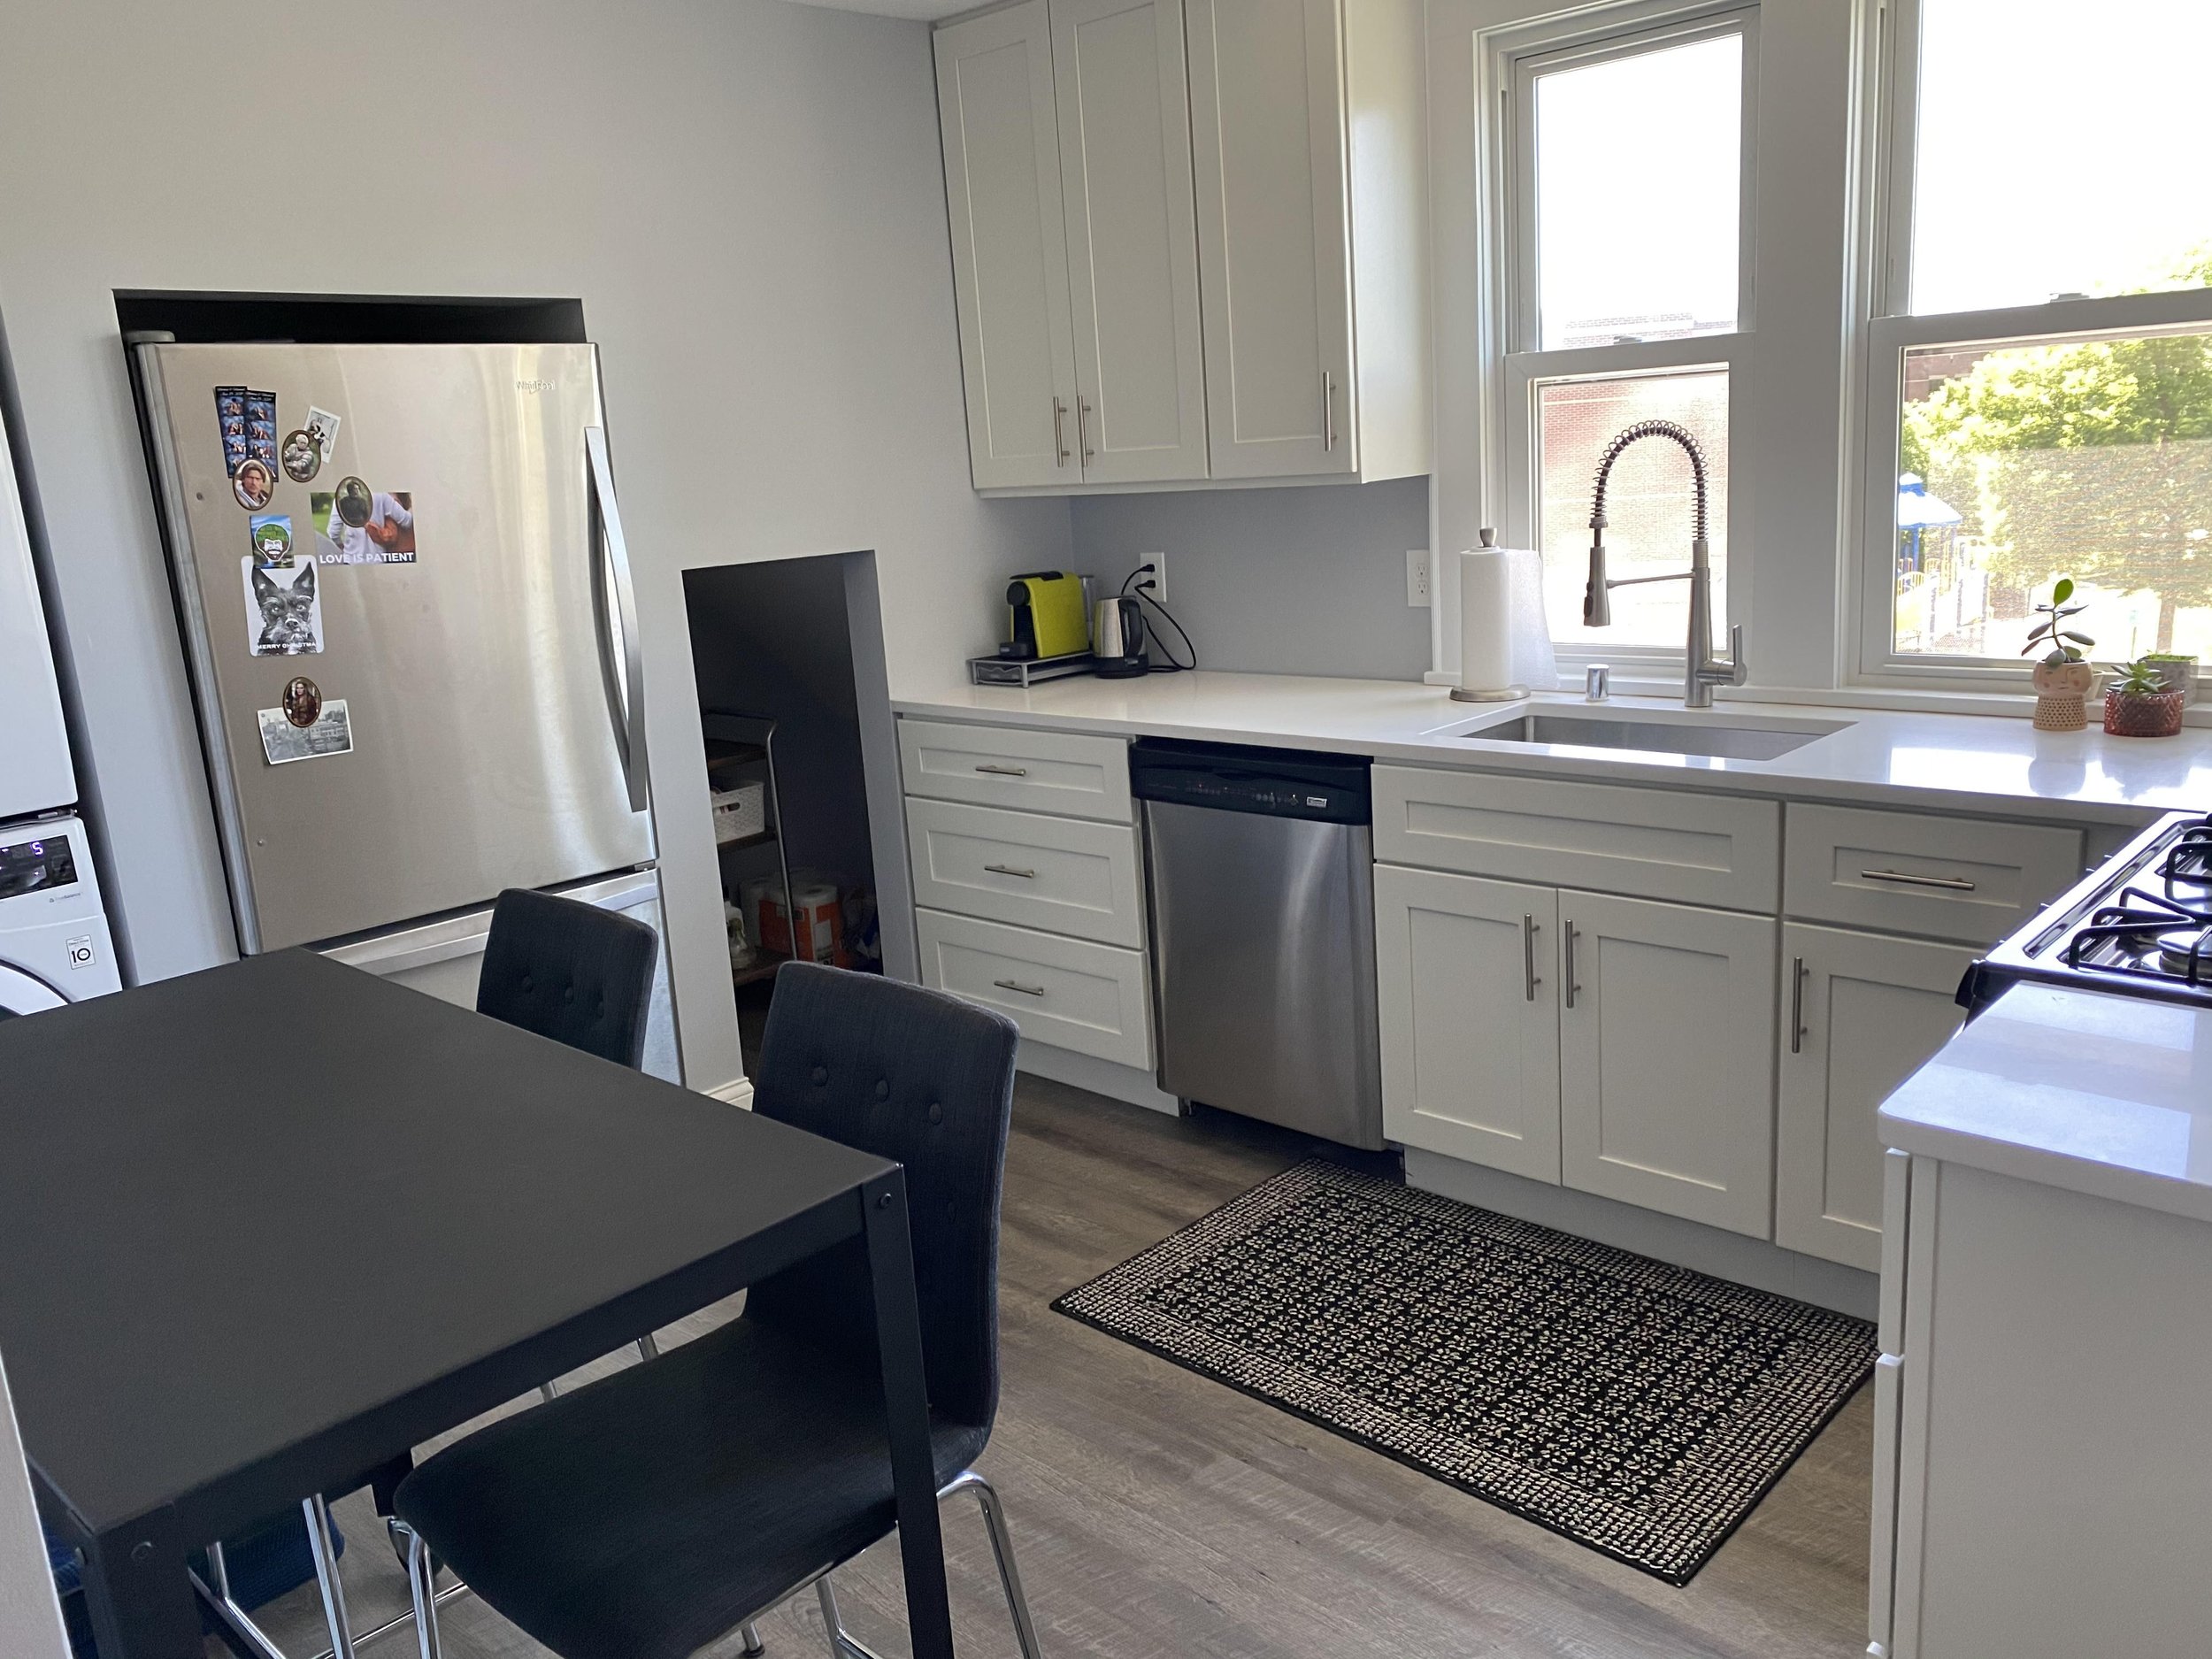 Rental apartment kitchen